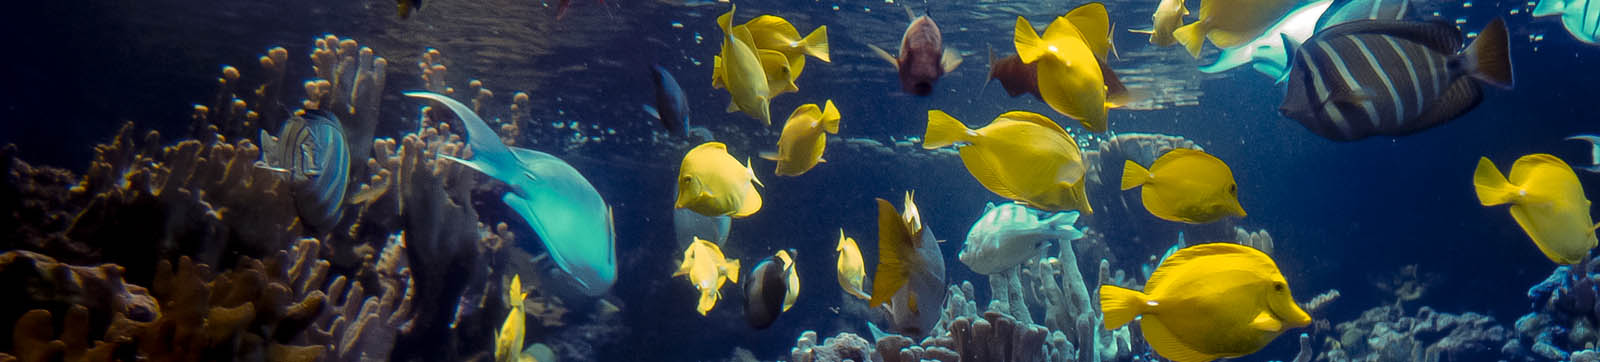 Maui Ocean Center fish